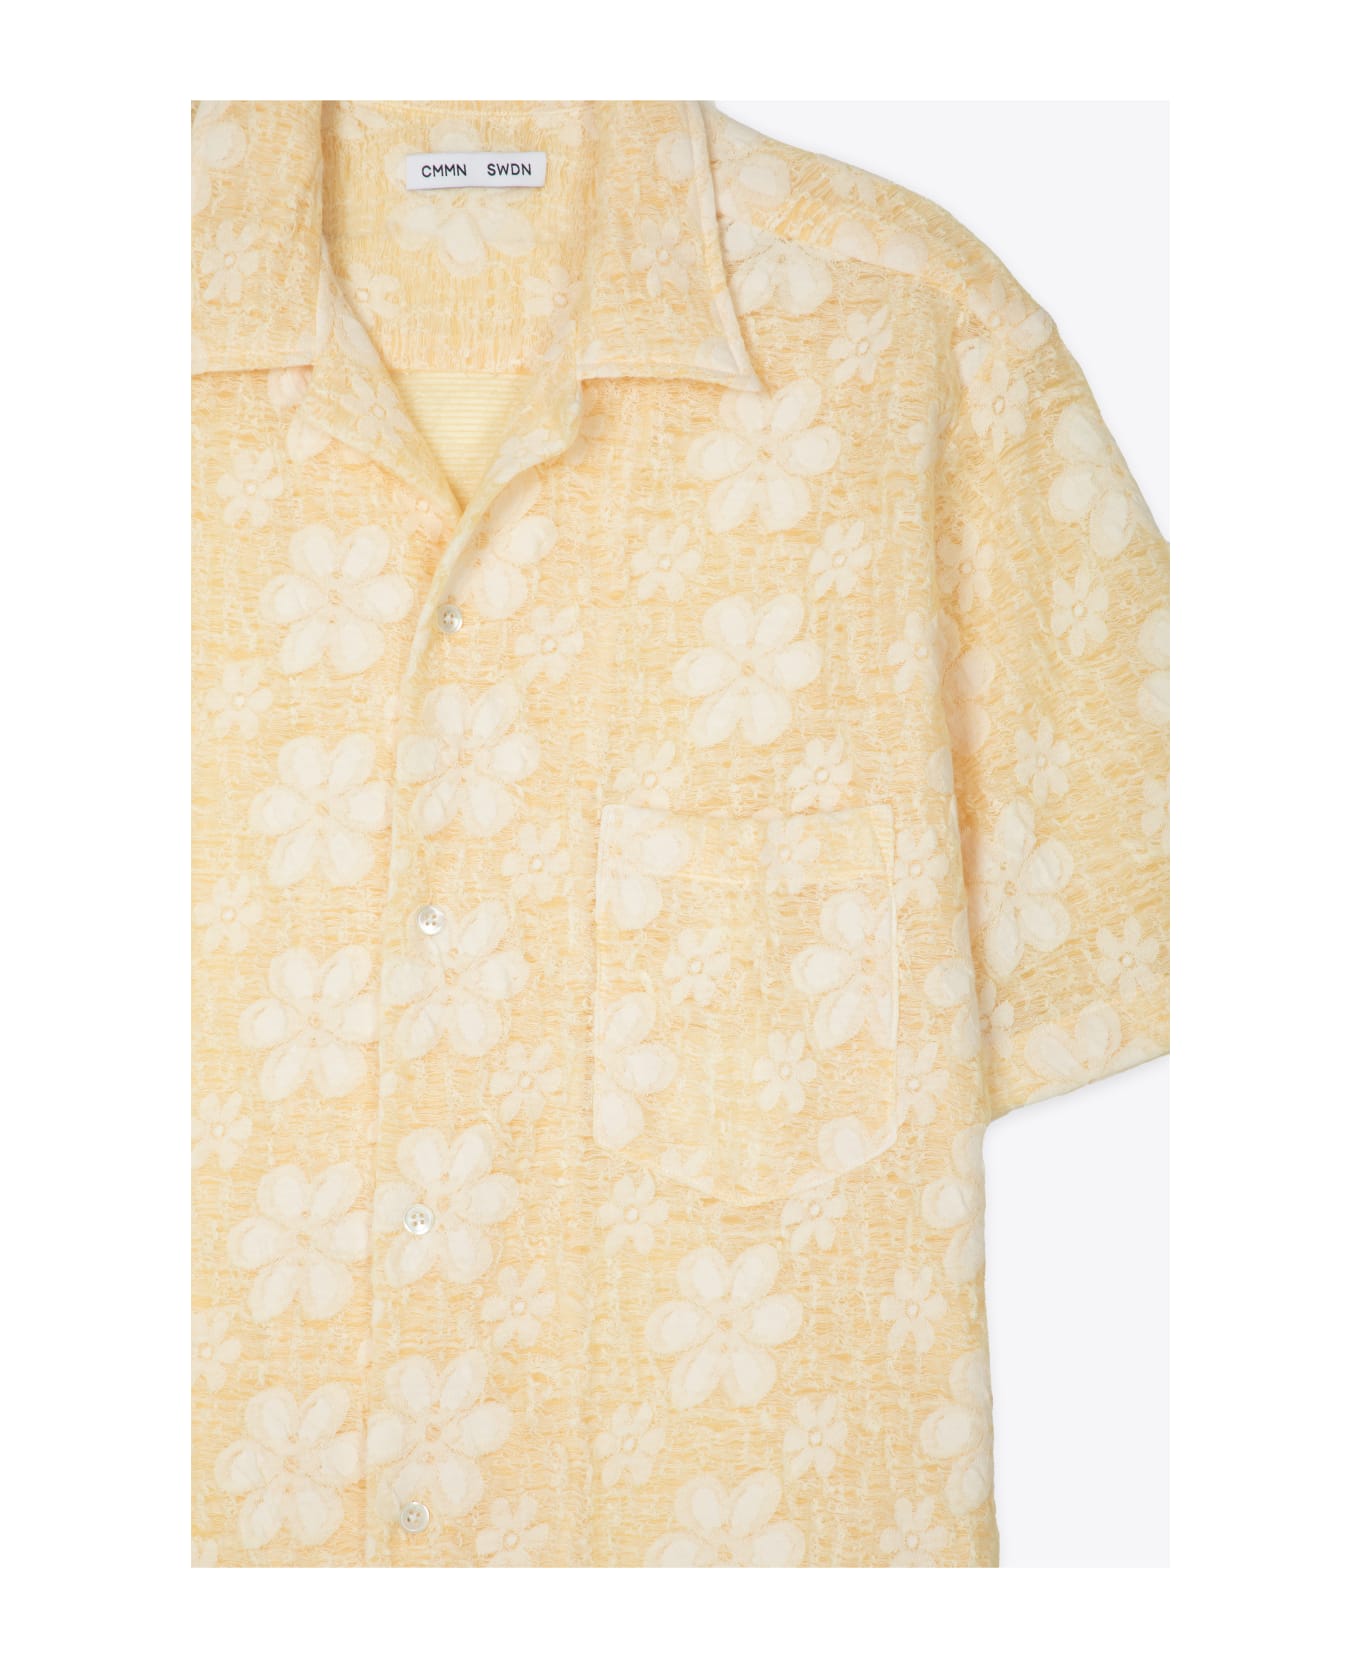 CMMN SWDN Short Sleeve Camp Collar Shirt In Regular Fit Yellow cotton blend floral shirt - Duncan - Giallo